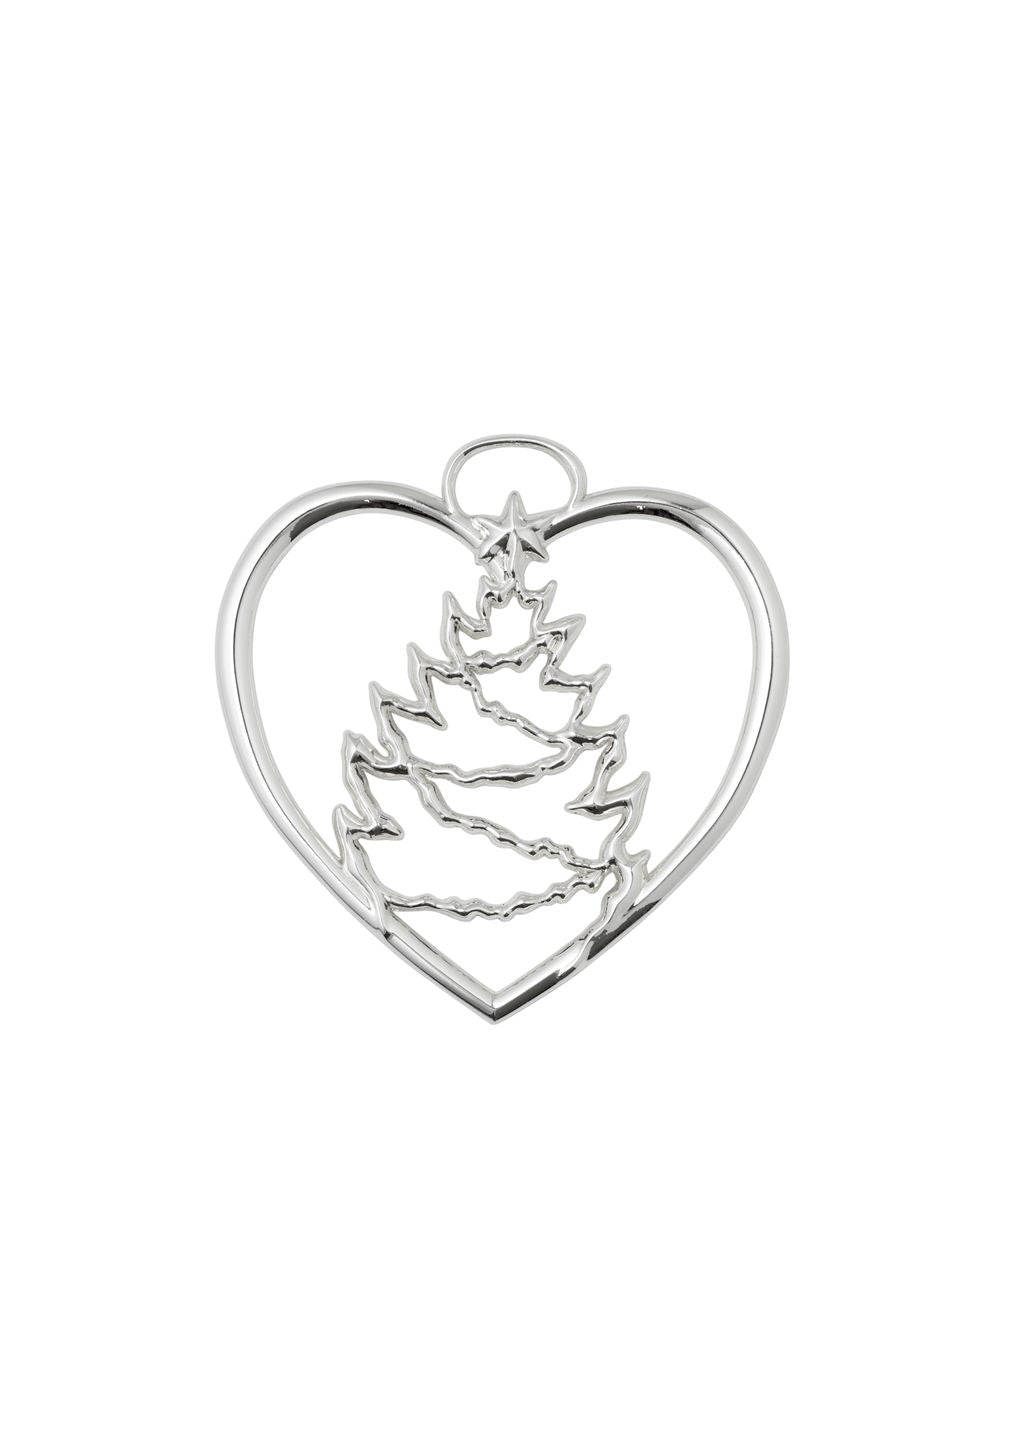 Rosendahl Karen Blixen Heart Christmas Tree H7.5 Cm, Silver Plated